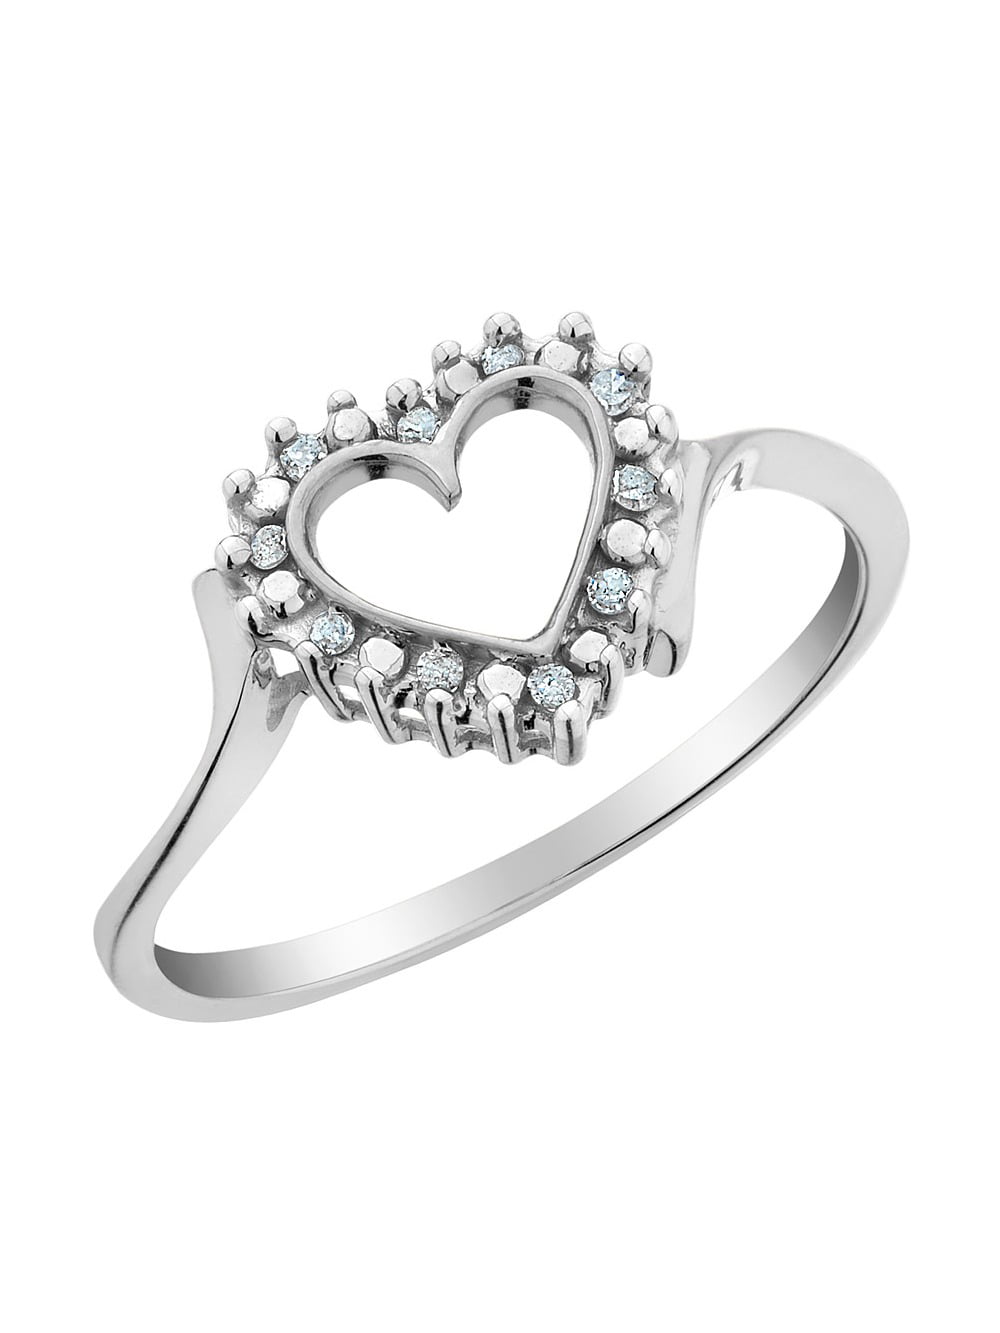 Men's Brush Spaced Diamonds Polished Edges Wedding Ring in White Gold 10K  7mm 3 Diamonds 0.09ct Size 10 | MADANI Rings